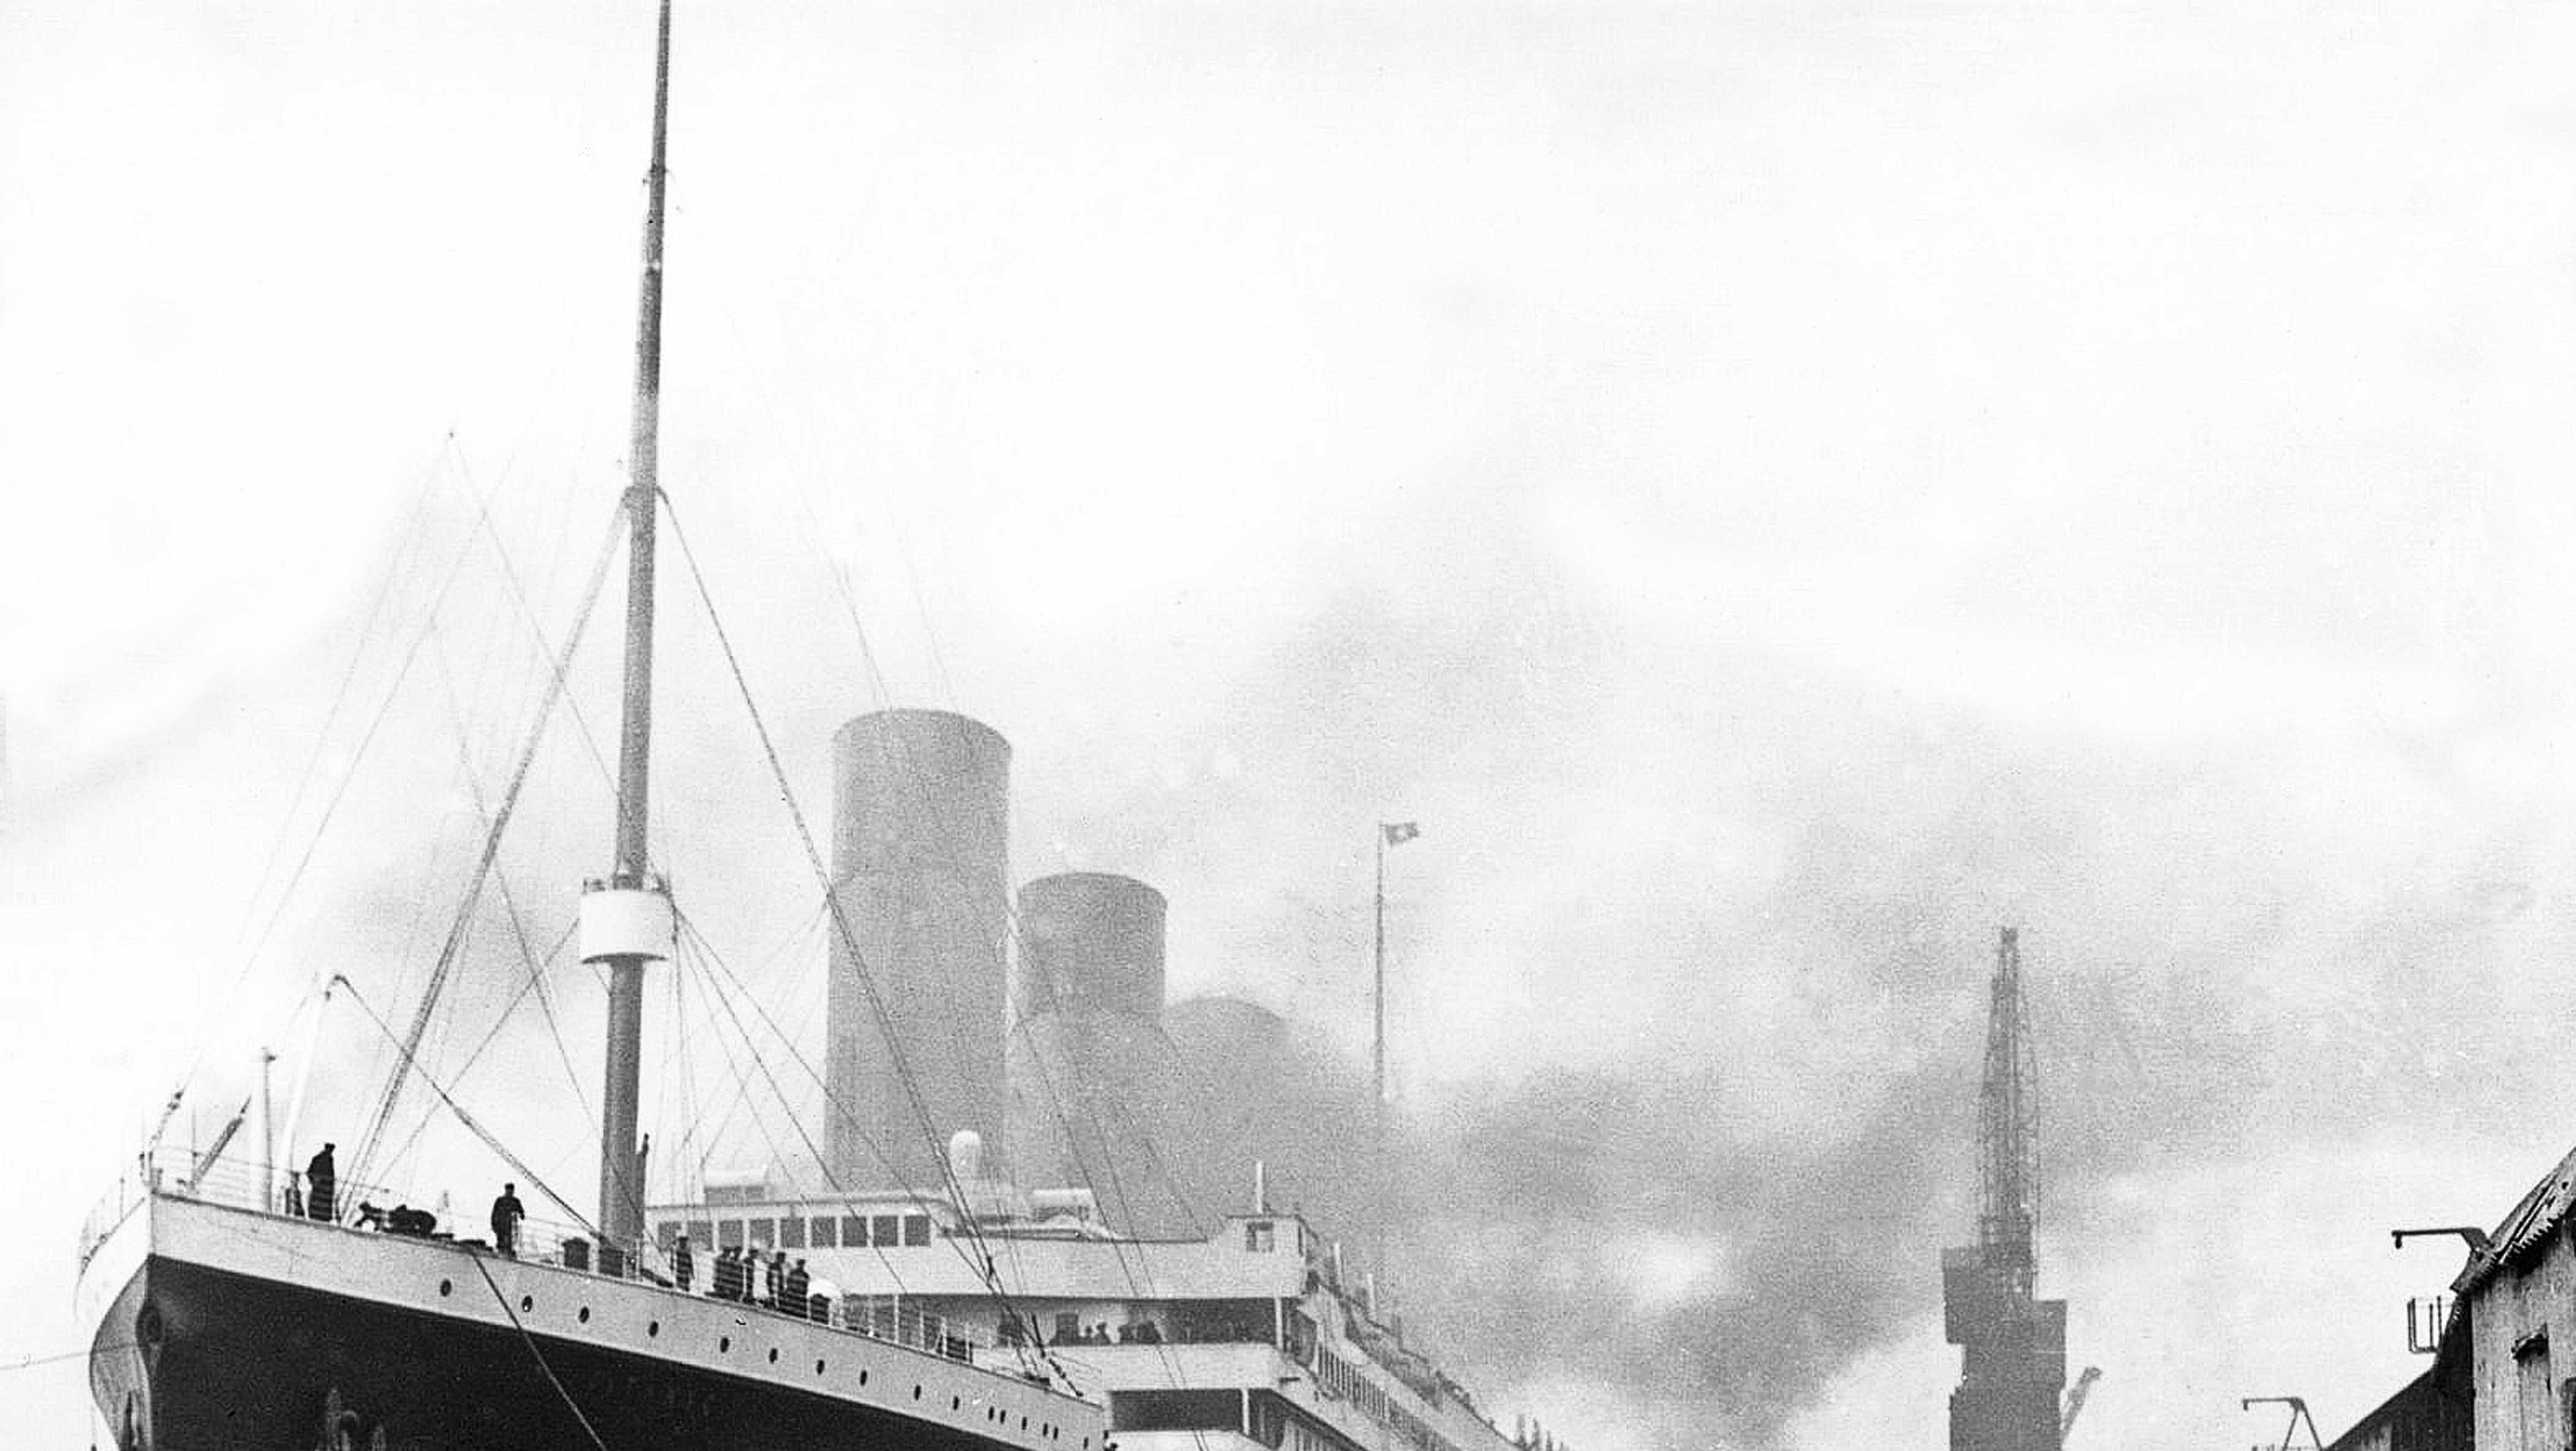 history of titanic ship sinking